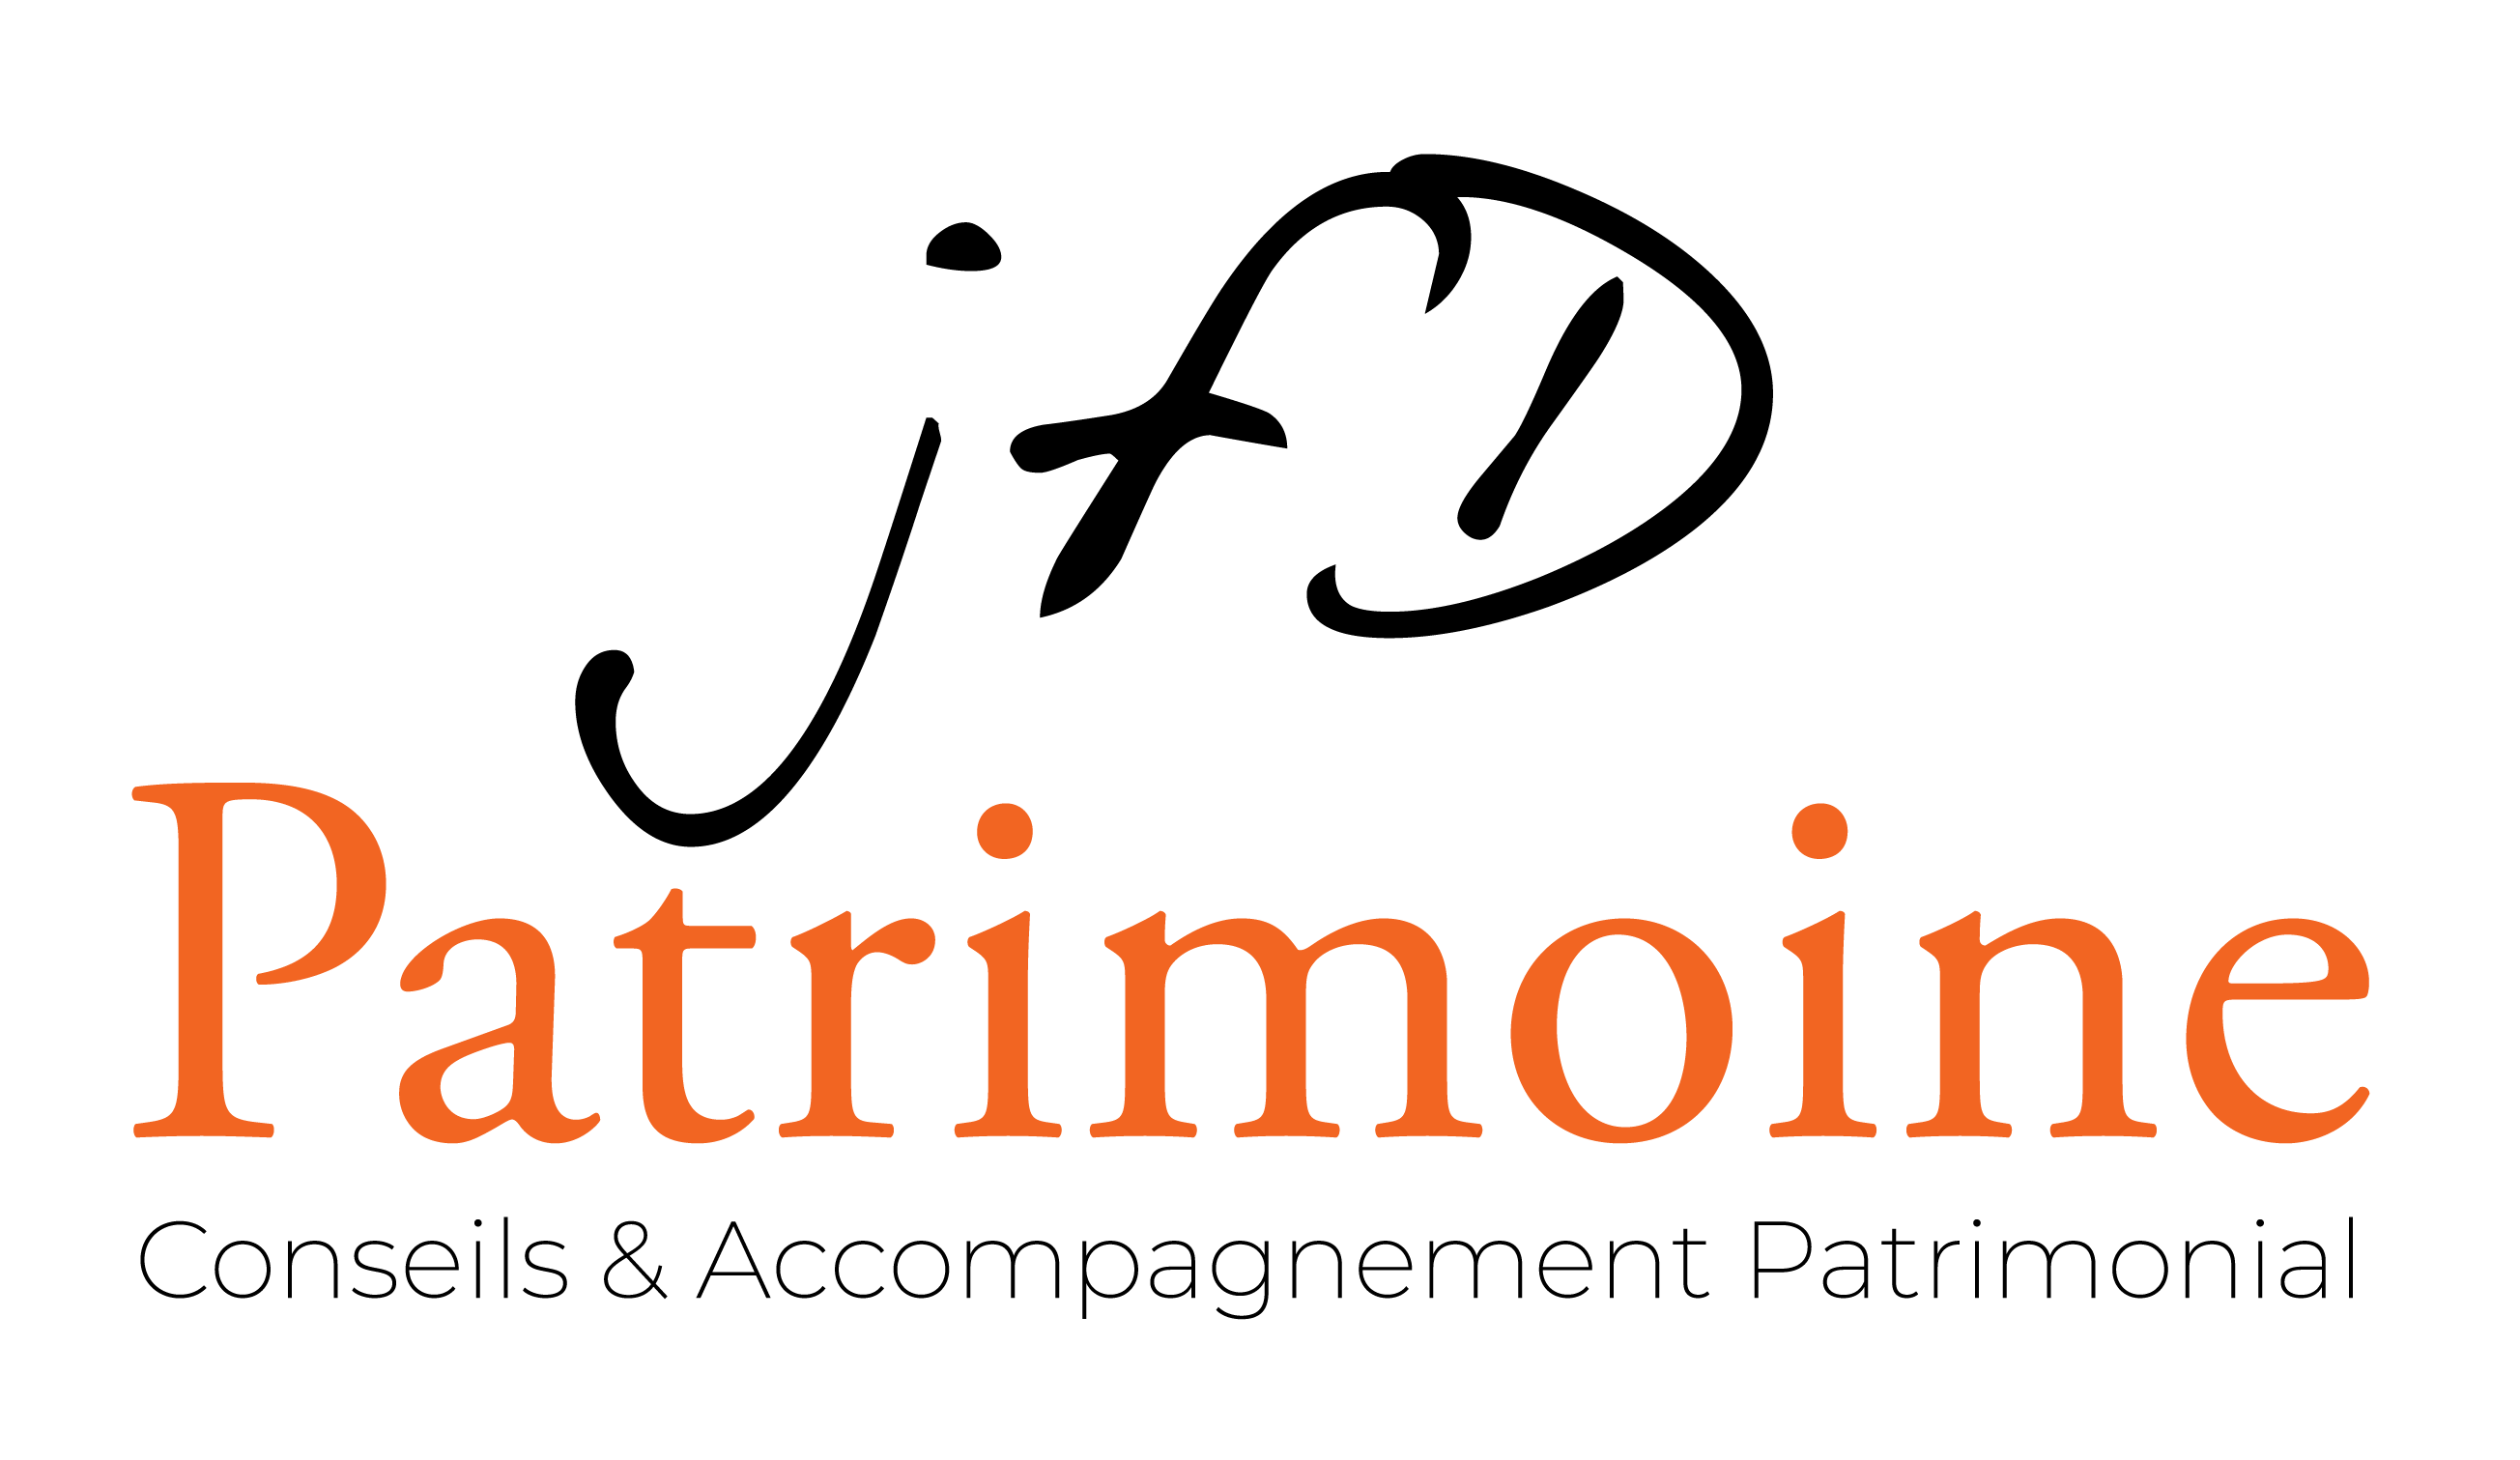 JFD Patrimoine